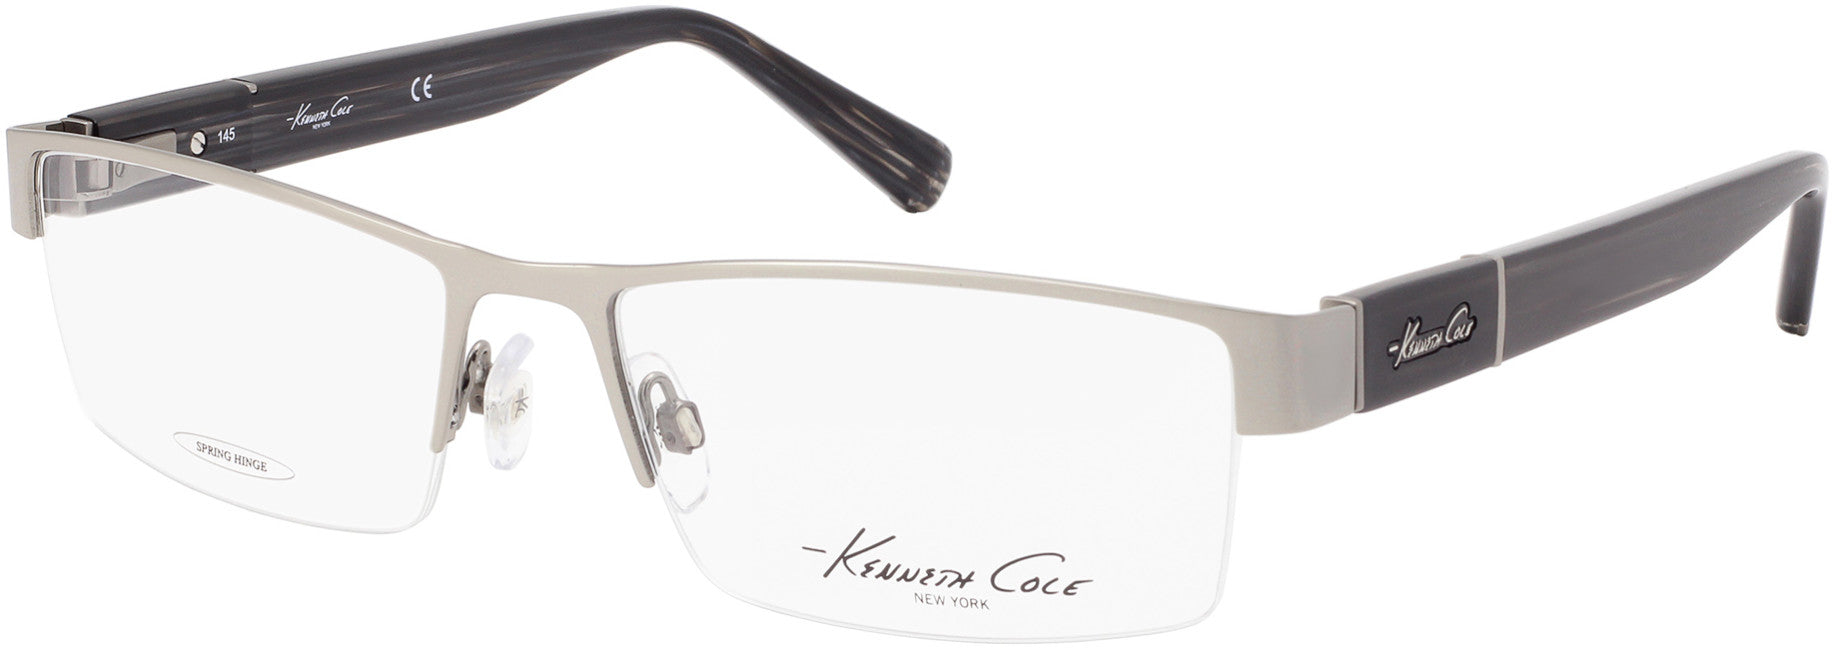 Kenneth Cole New York,Kenneth Cole Reaction KC0217 Eyeglasses 009-009 - Matte Gunmetal